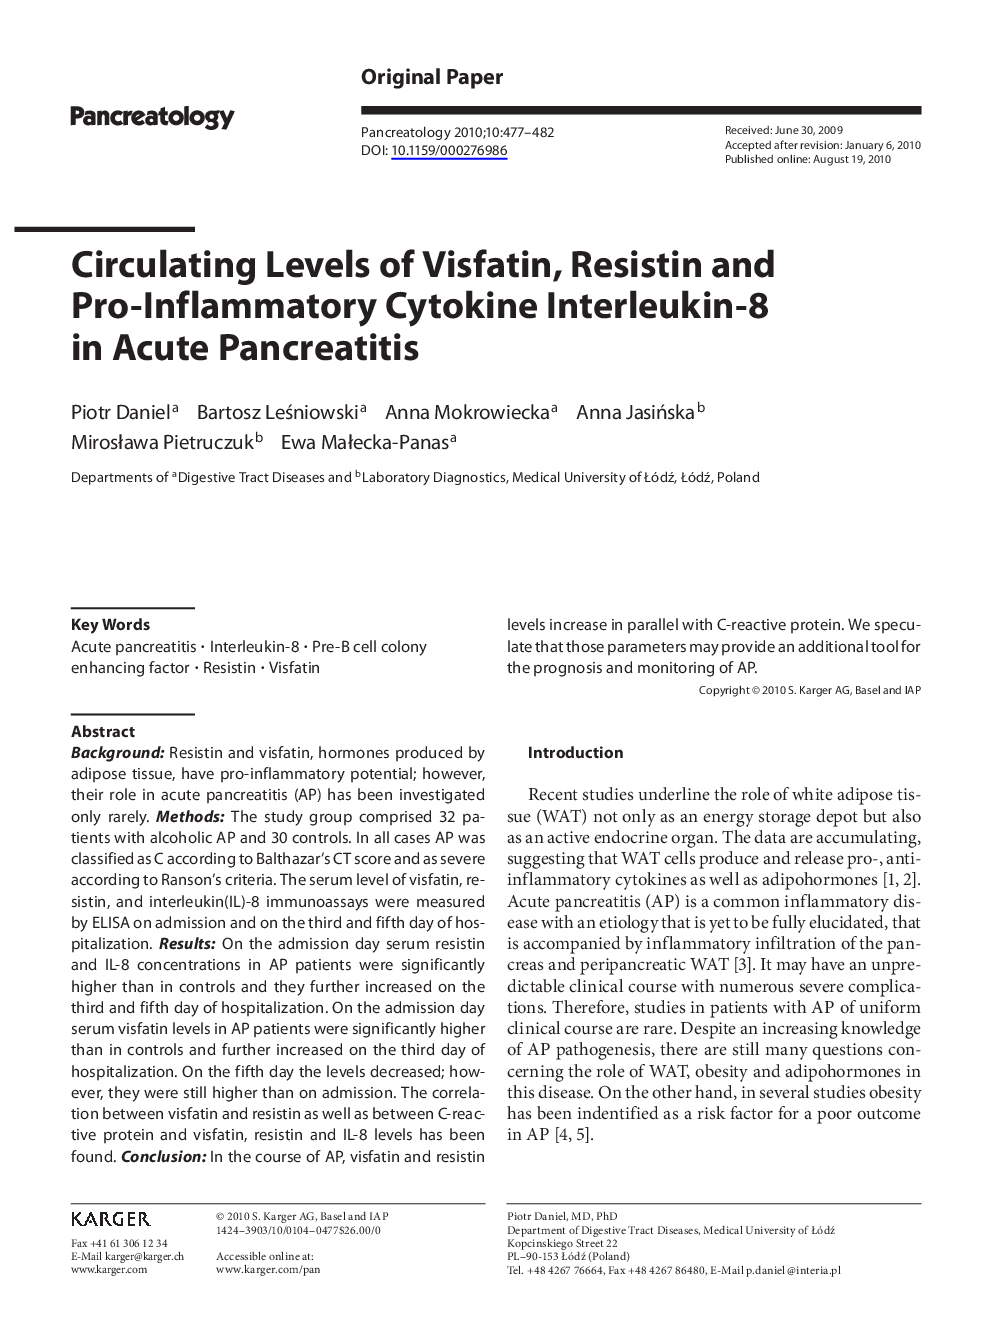 Circulating Levels of Visfatin, Resistin and Pro-Inflammatory Cytokine Interleukin-8 in Acute Pancreatitis